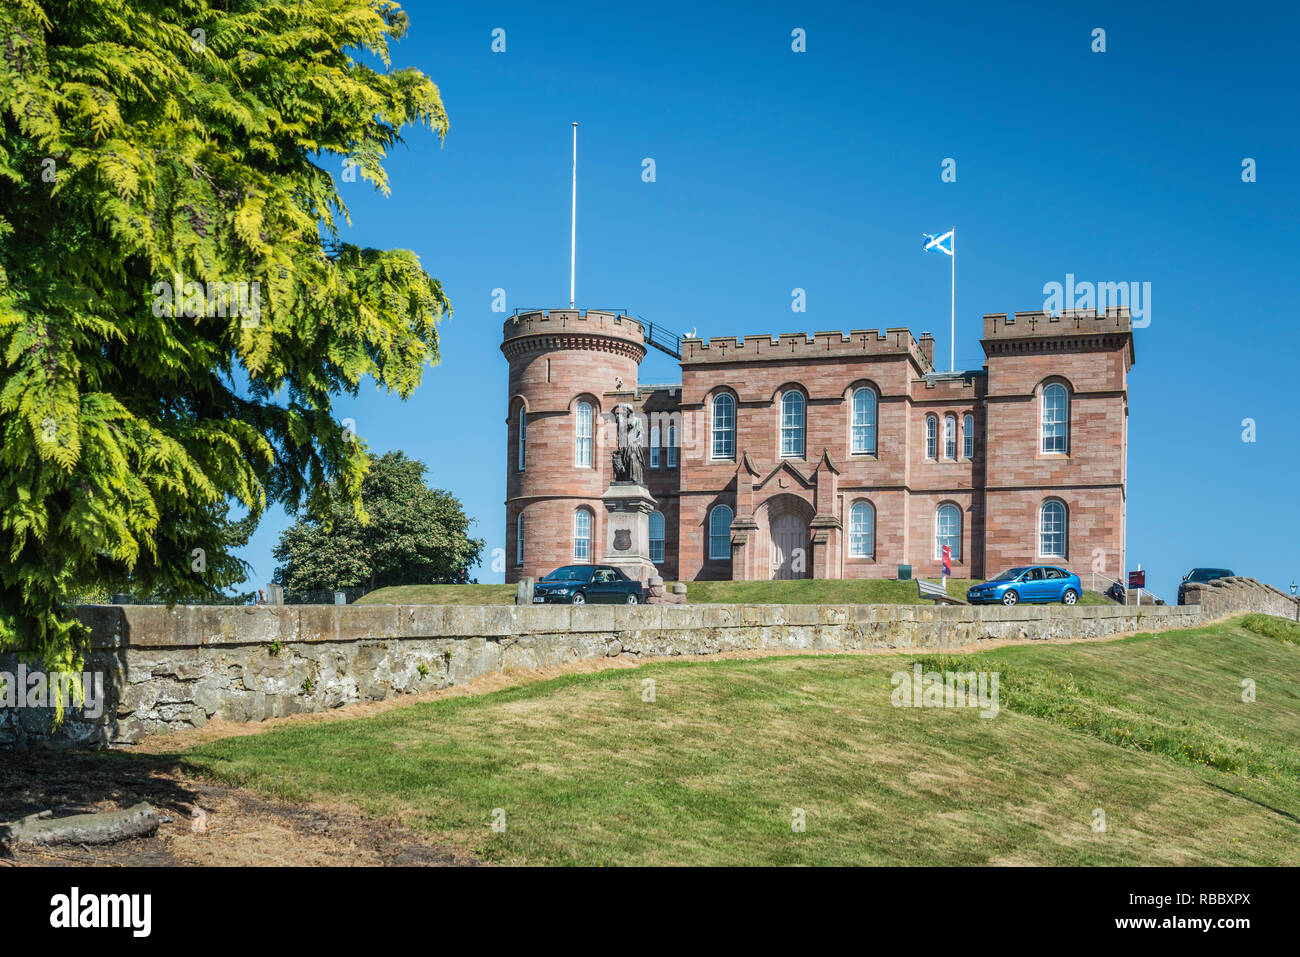 The inverness Castle in Inverness, Scotland, United Kingdom, Europe. Stock Photo